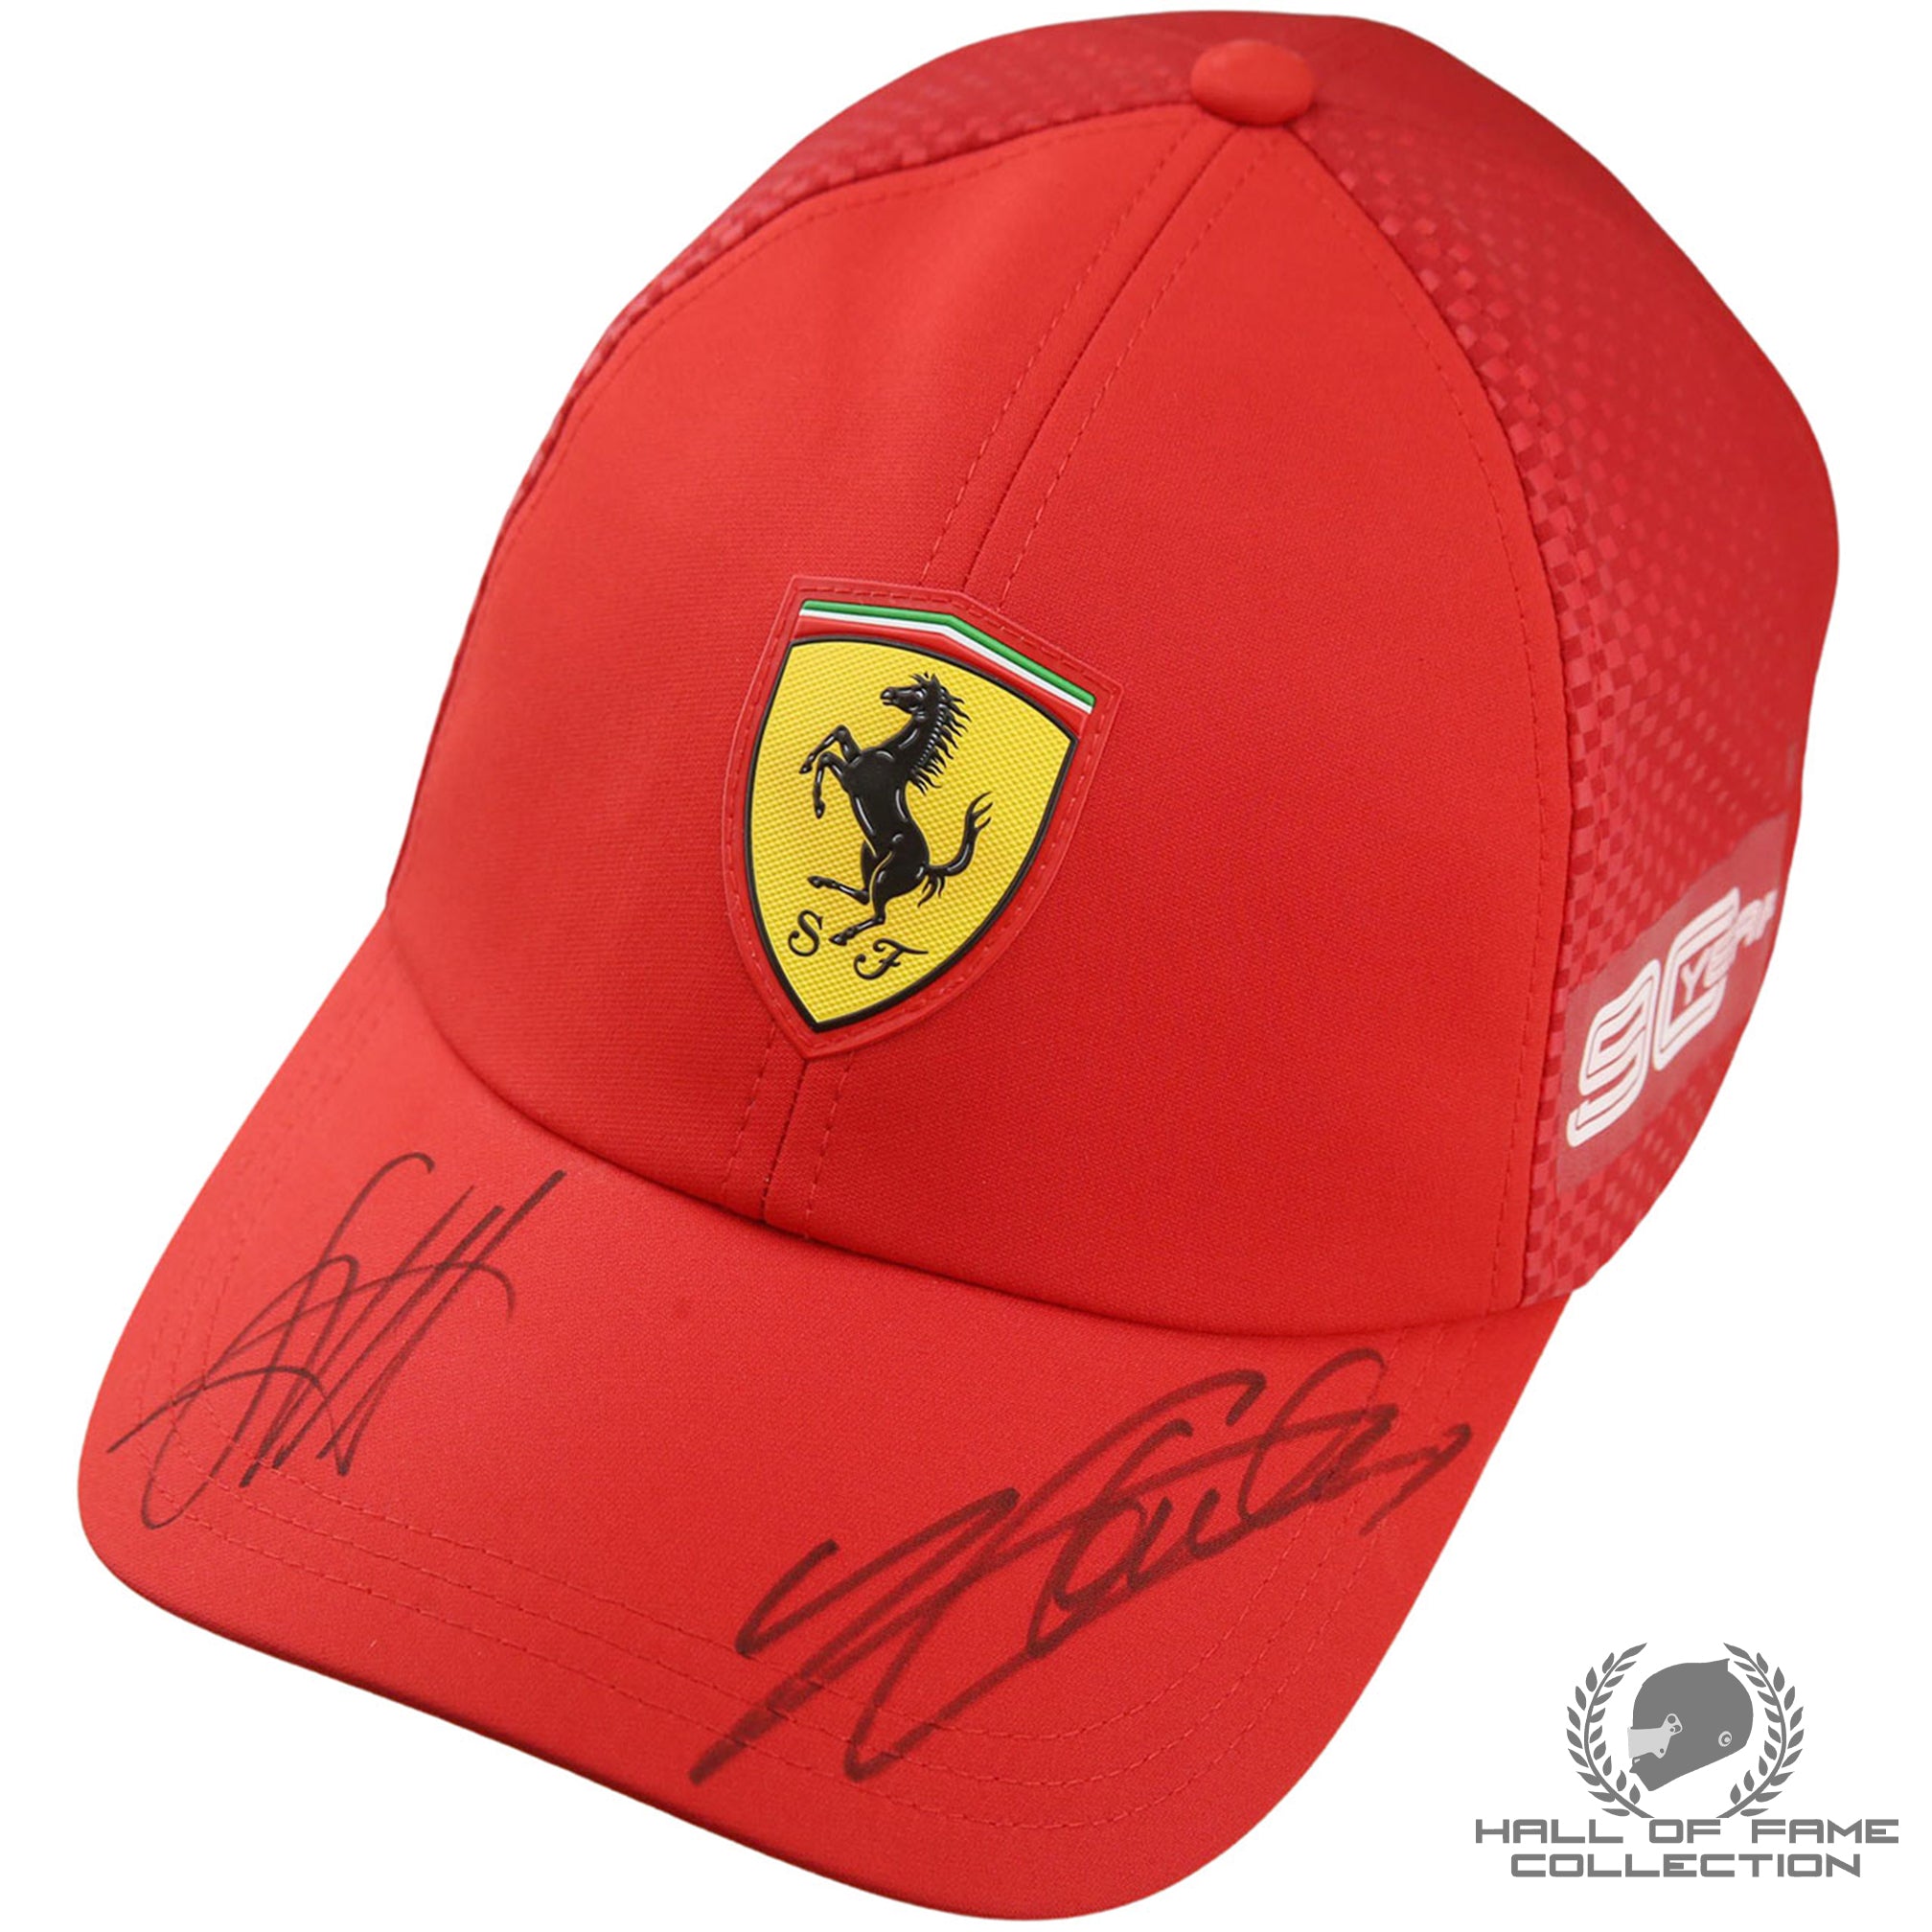 2019 Sebastian Vettel & Charles Leclerc Signed 90 Years Official Scuderia Ferrari F1 Hat